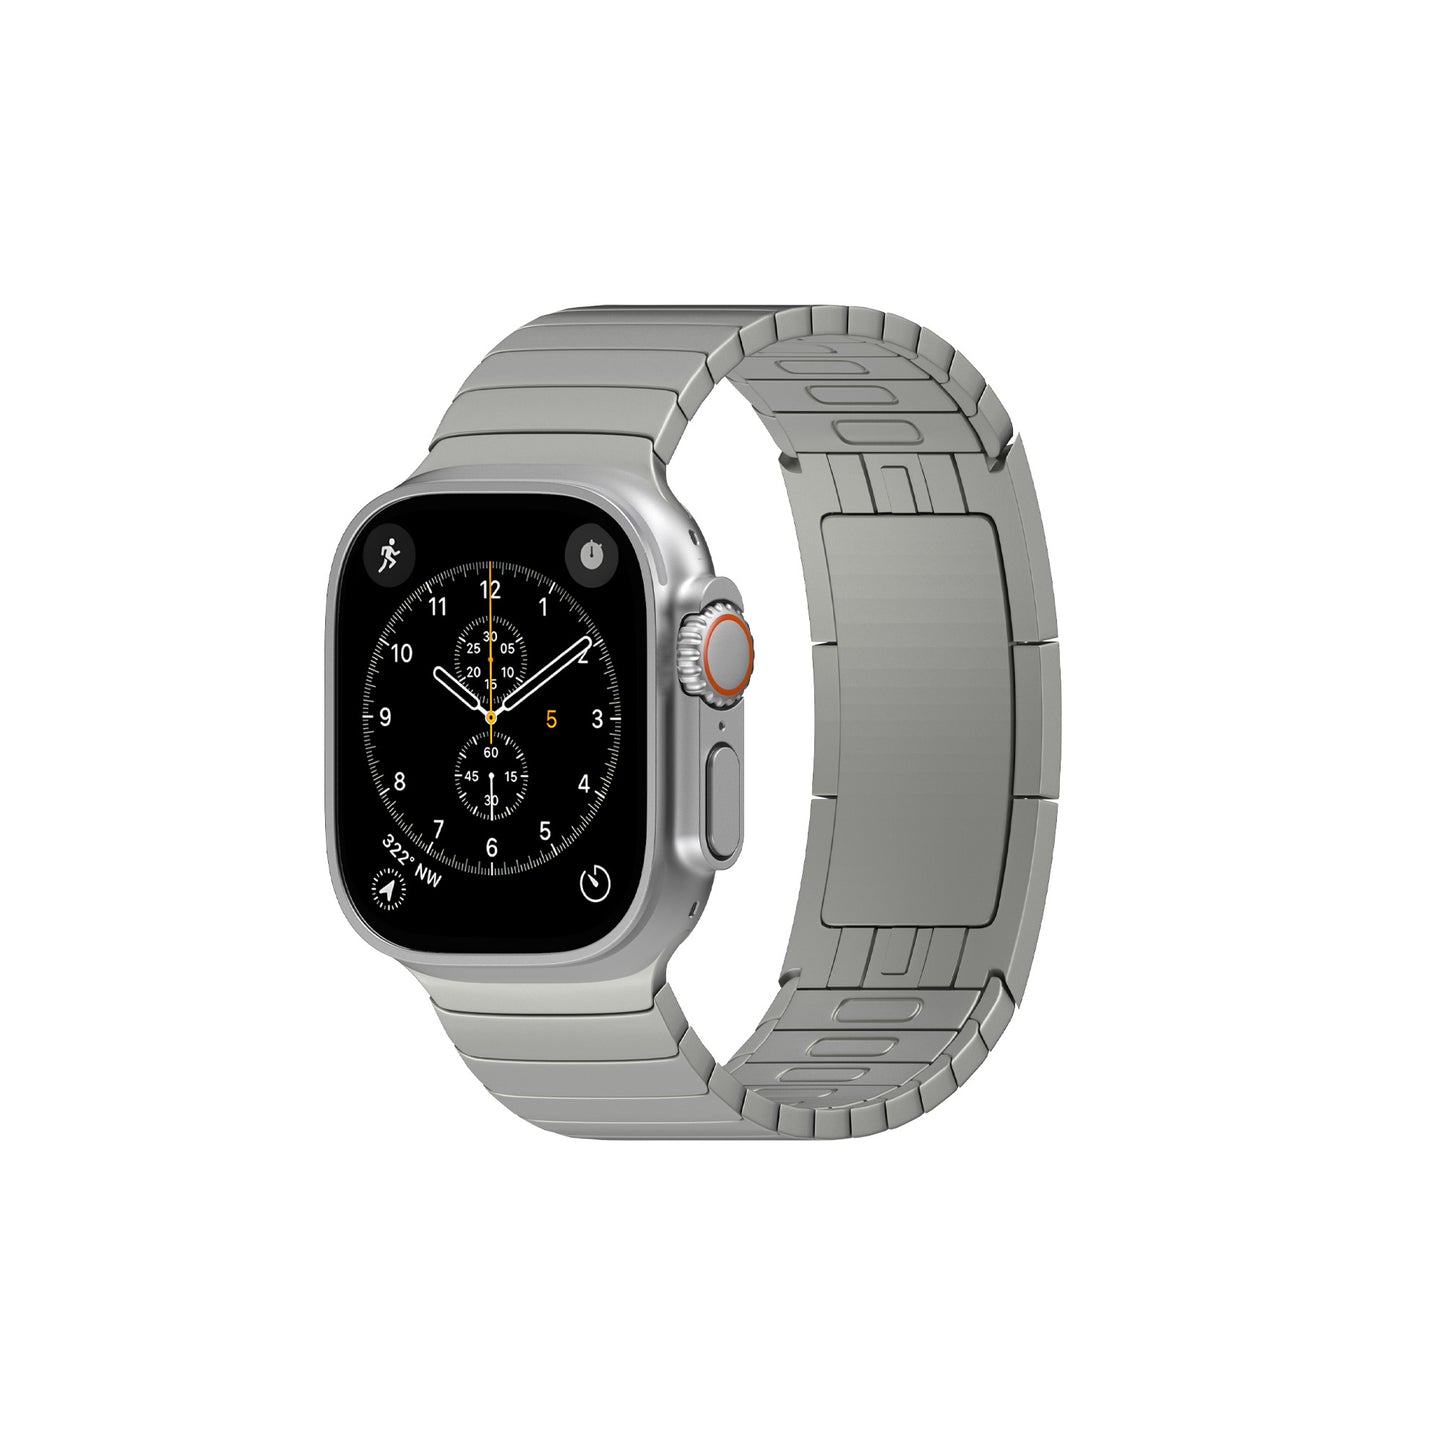 Stainless steel link bracelet for Apple Watch